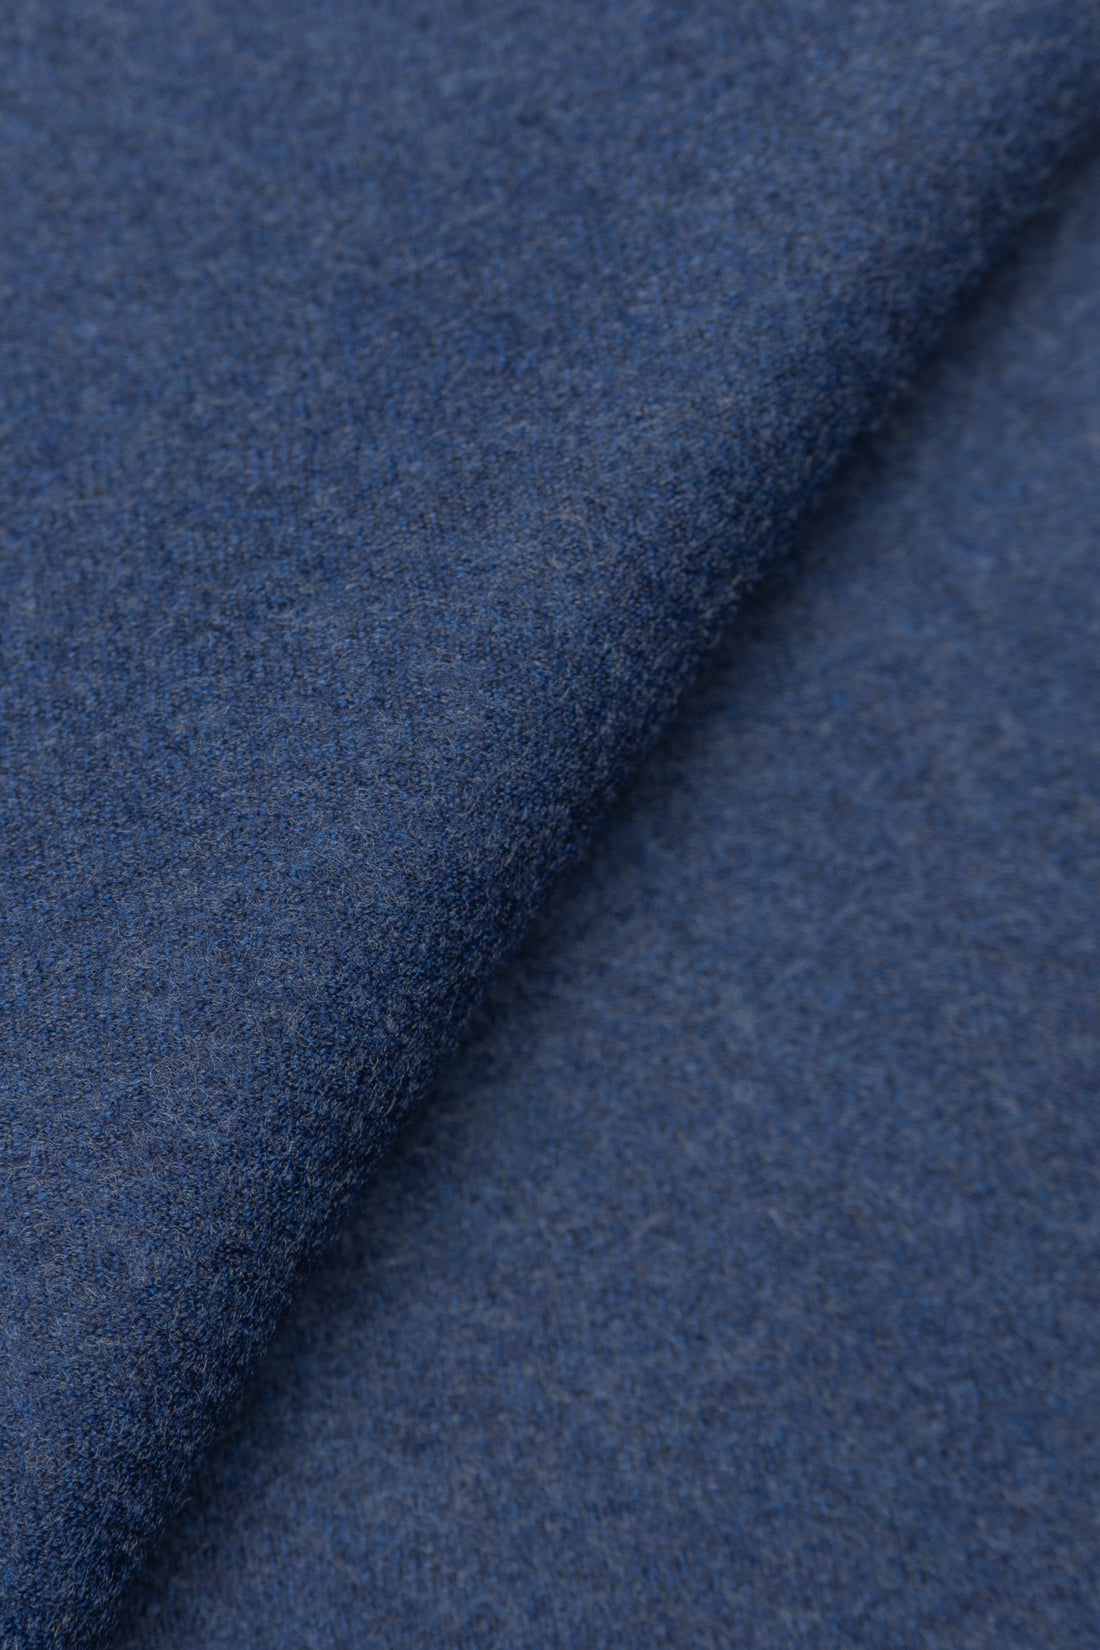 Blue Lightweight Flannel 150s Trousers